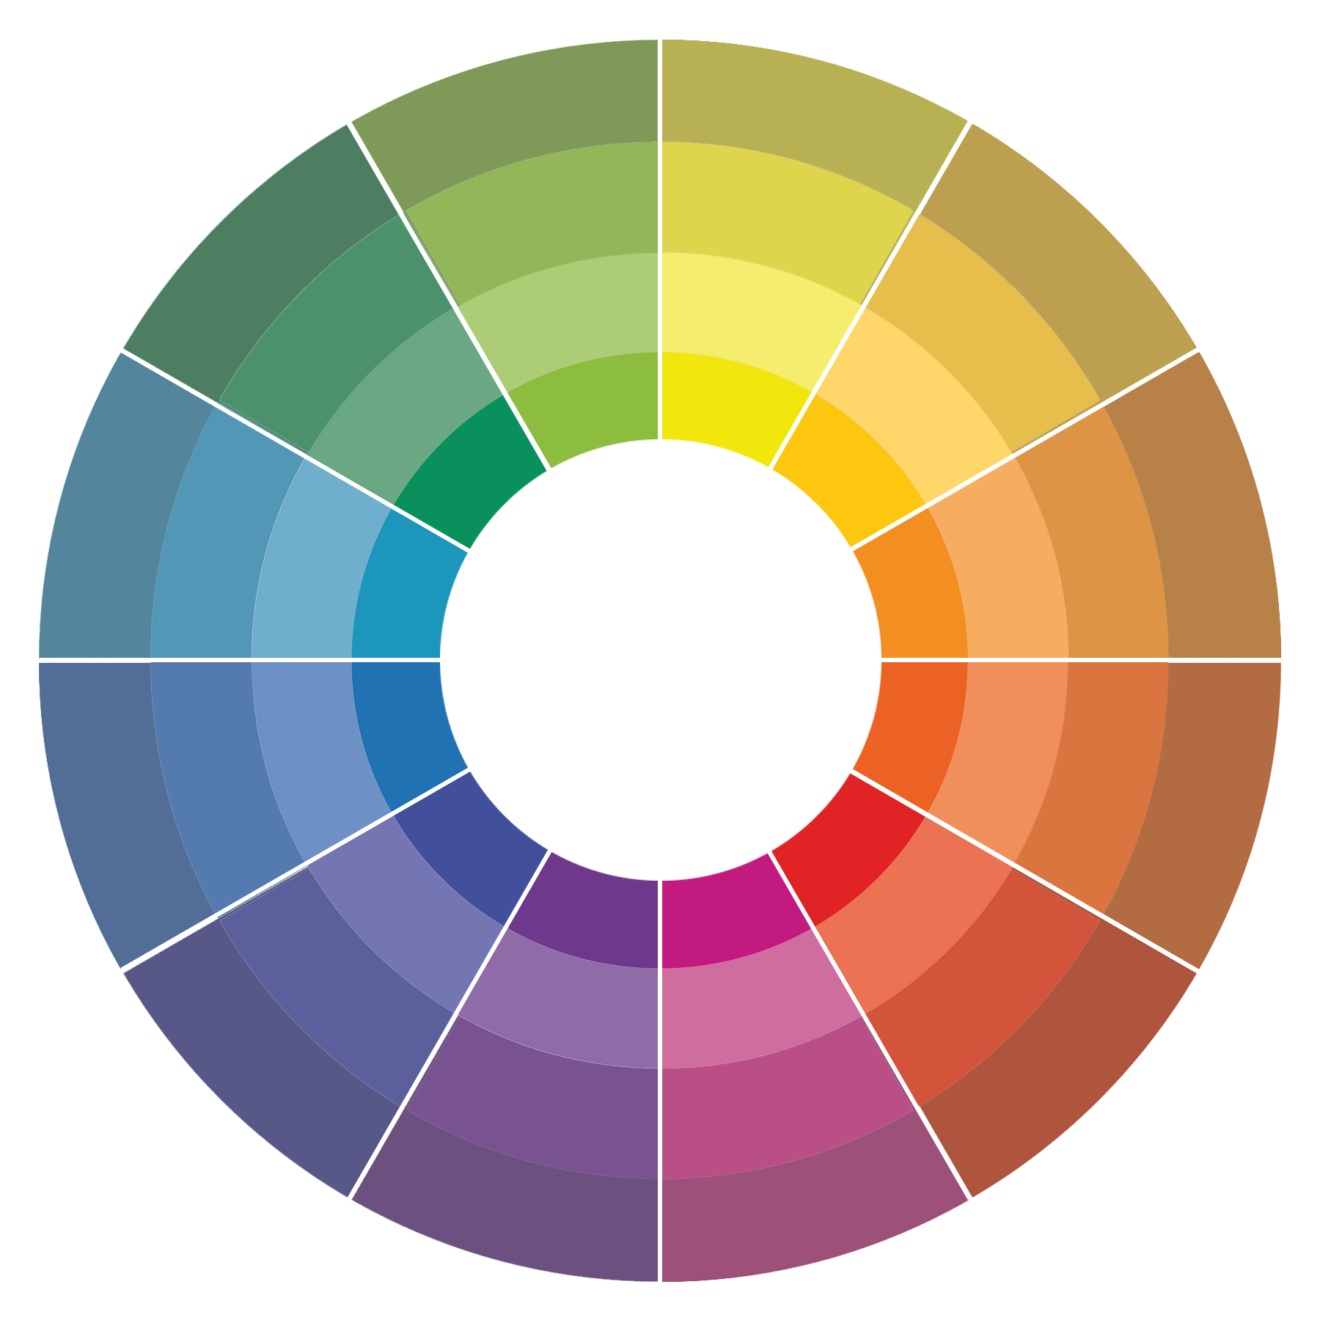 The complete colour wheel